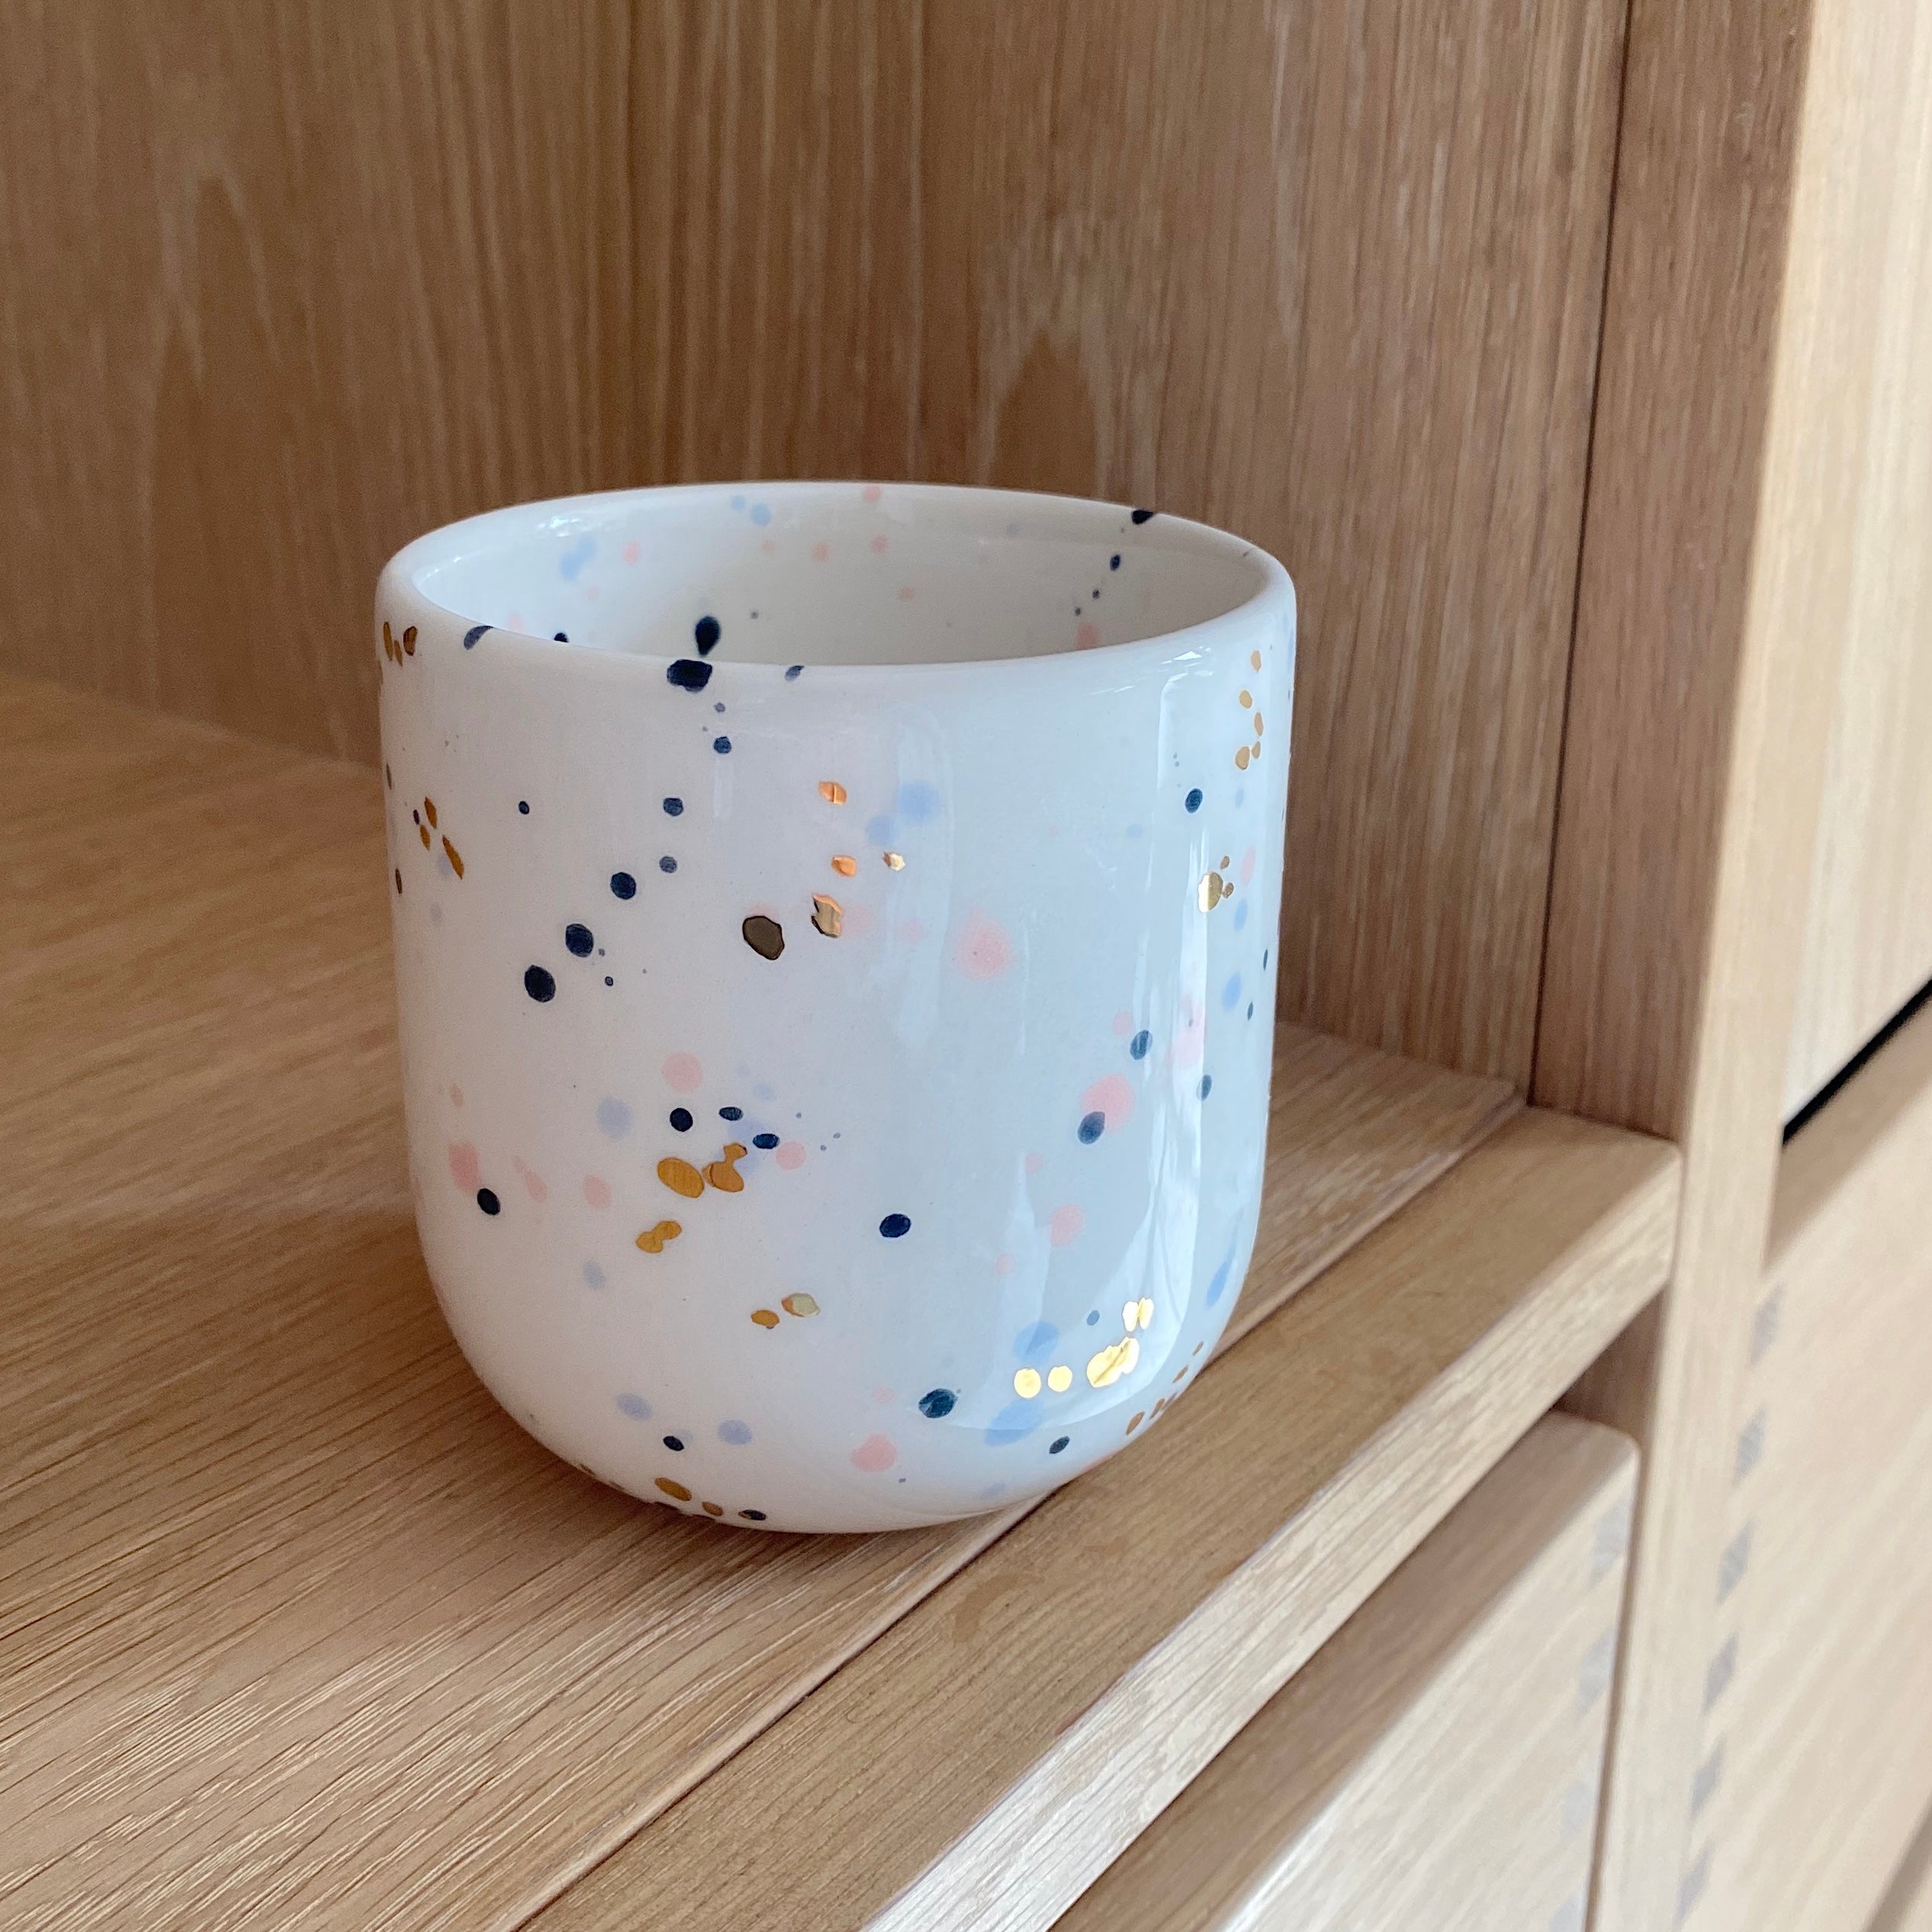 Marinski Heartmade latte cup speckles - dark blue, celestial blue, pink and gold